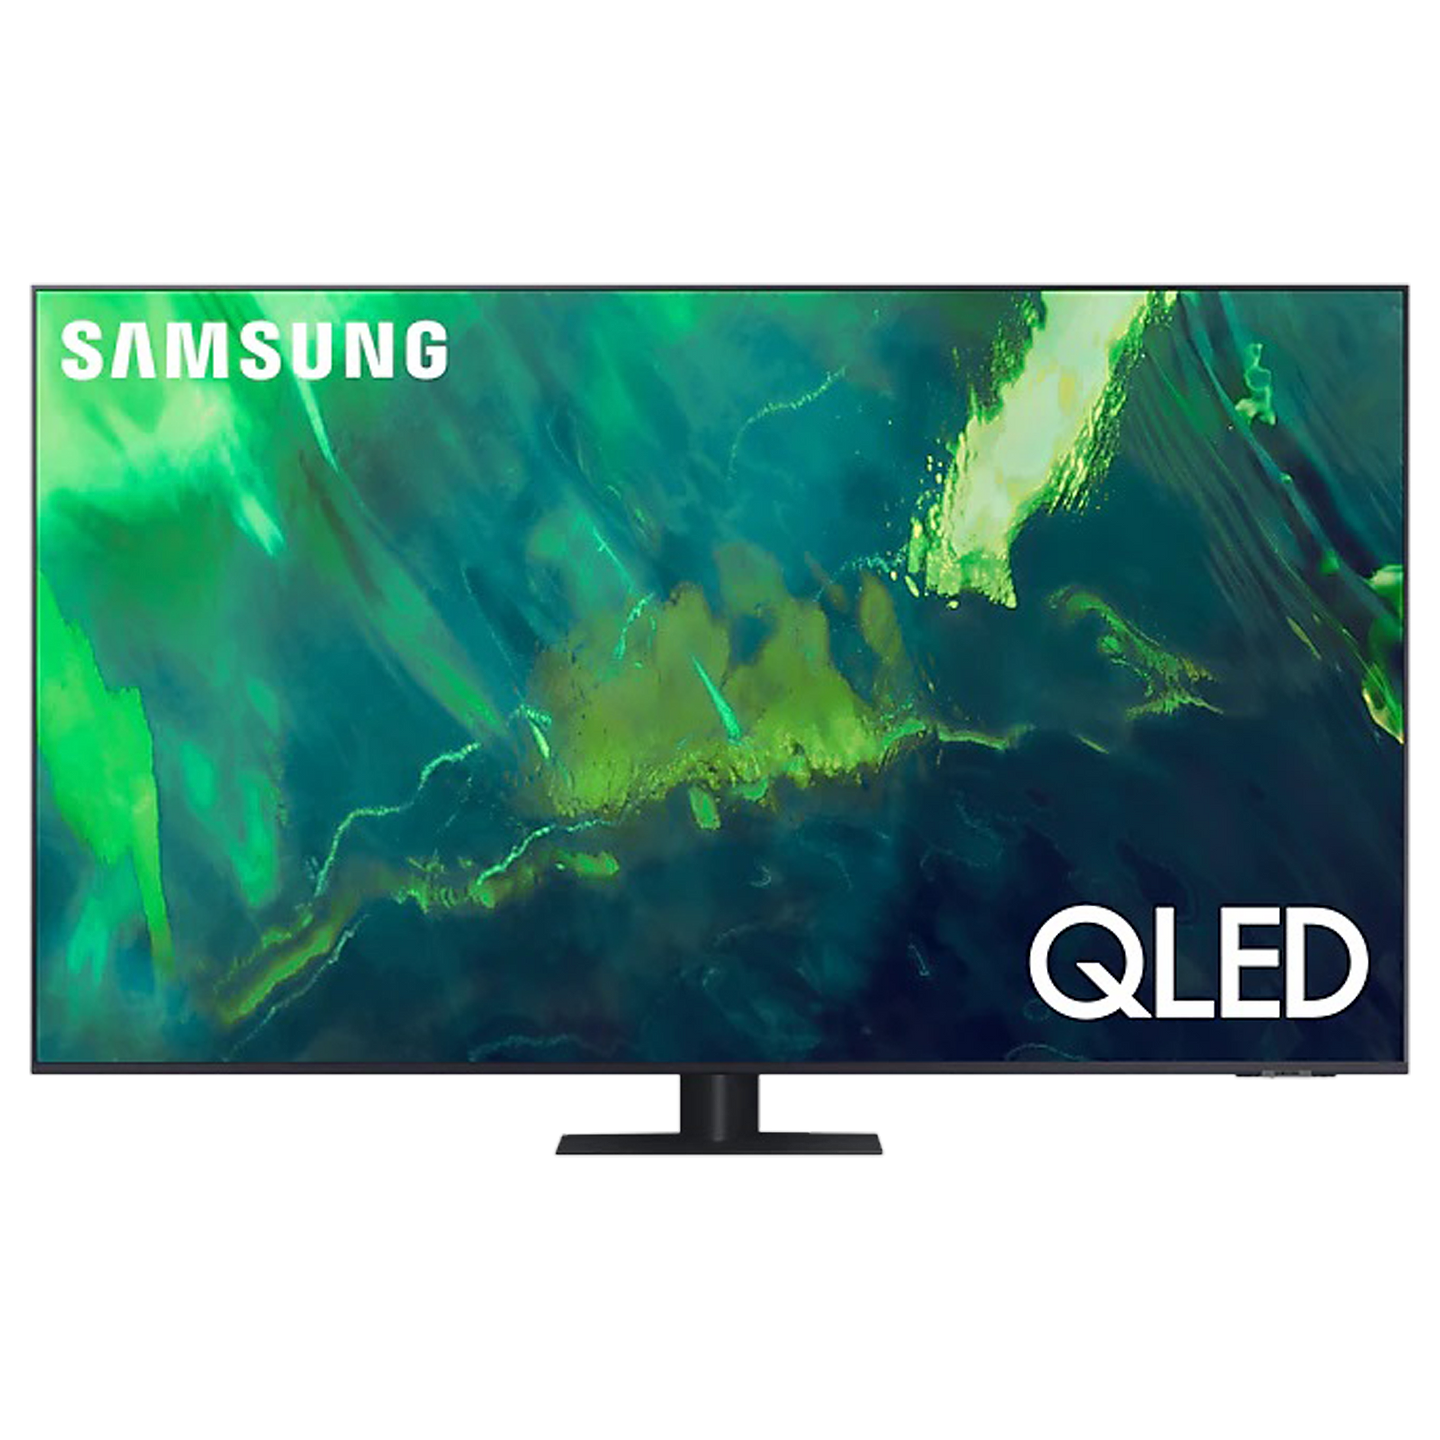 Samsung 7 Series 163cm (65 Inch) Ultra HD 4K QLED Smart TV